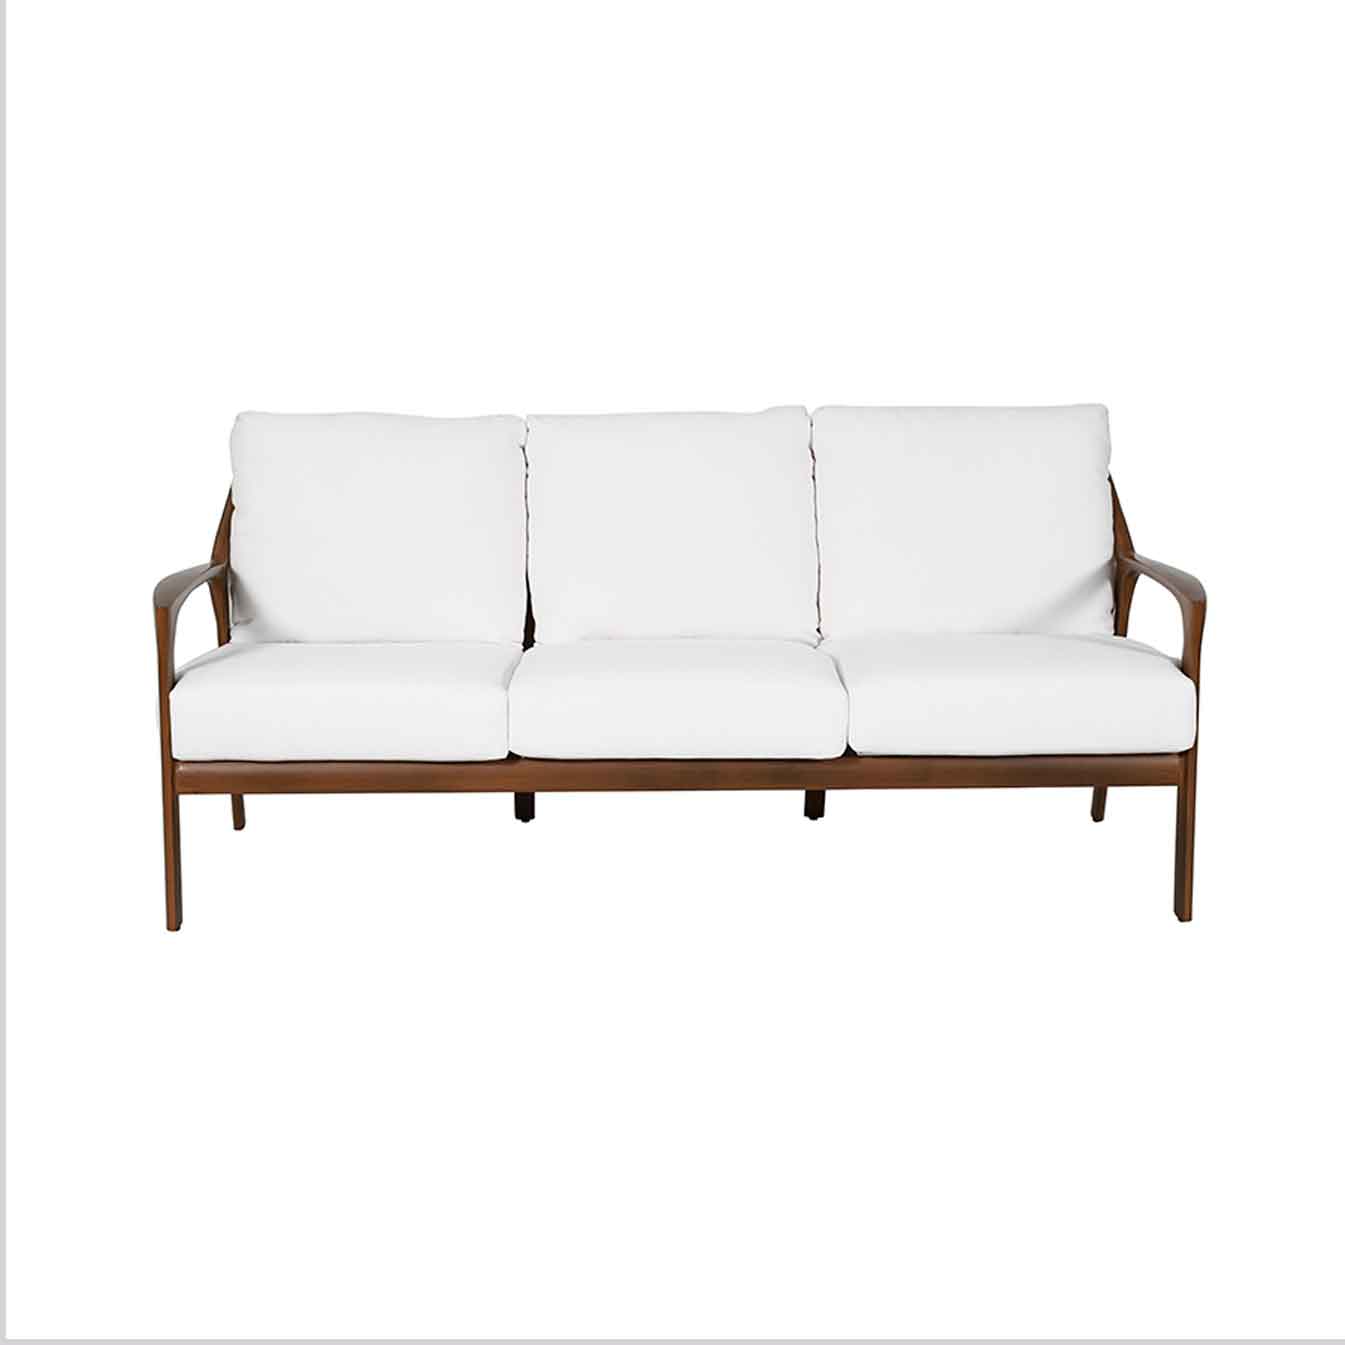 Berkeley Crescent Sofa - Brushed Pecan Finish